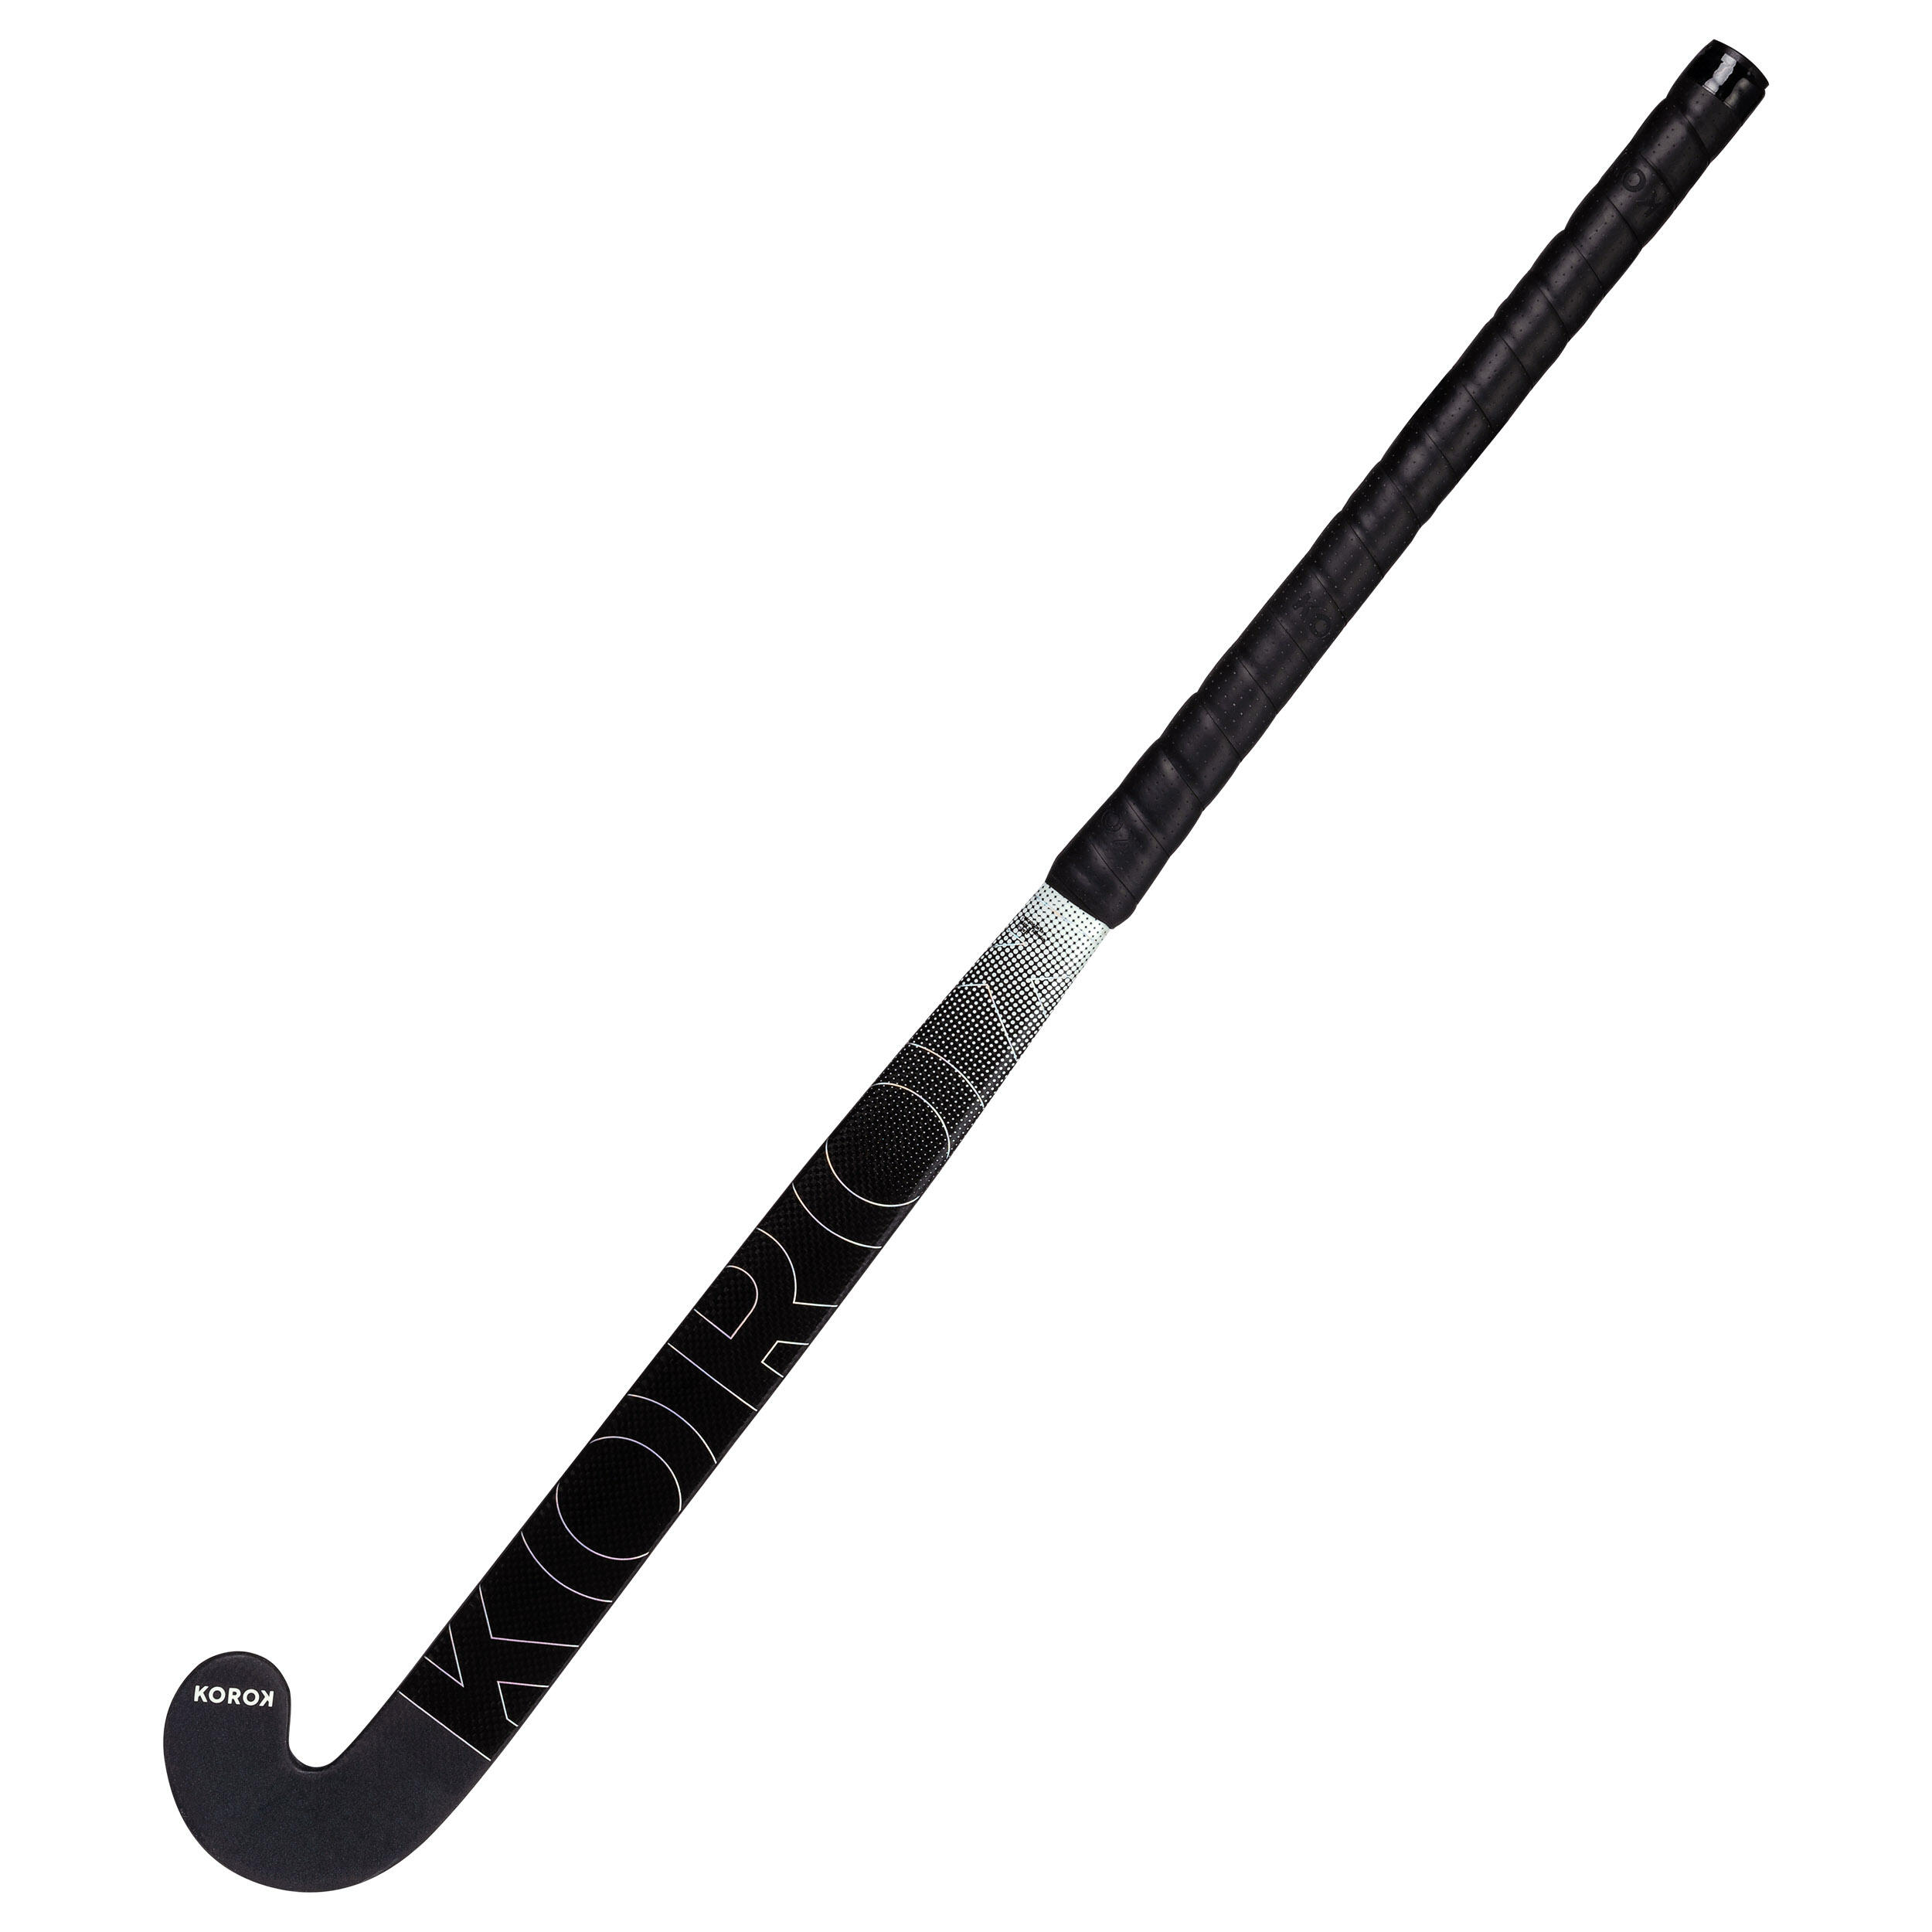 Adult Intermediate 60% Carbon Low Bow Field Hockey Stick FH560 - Black/Grey 4/12